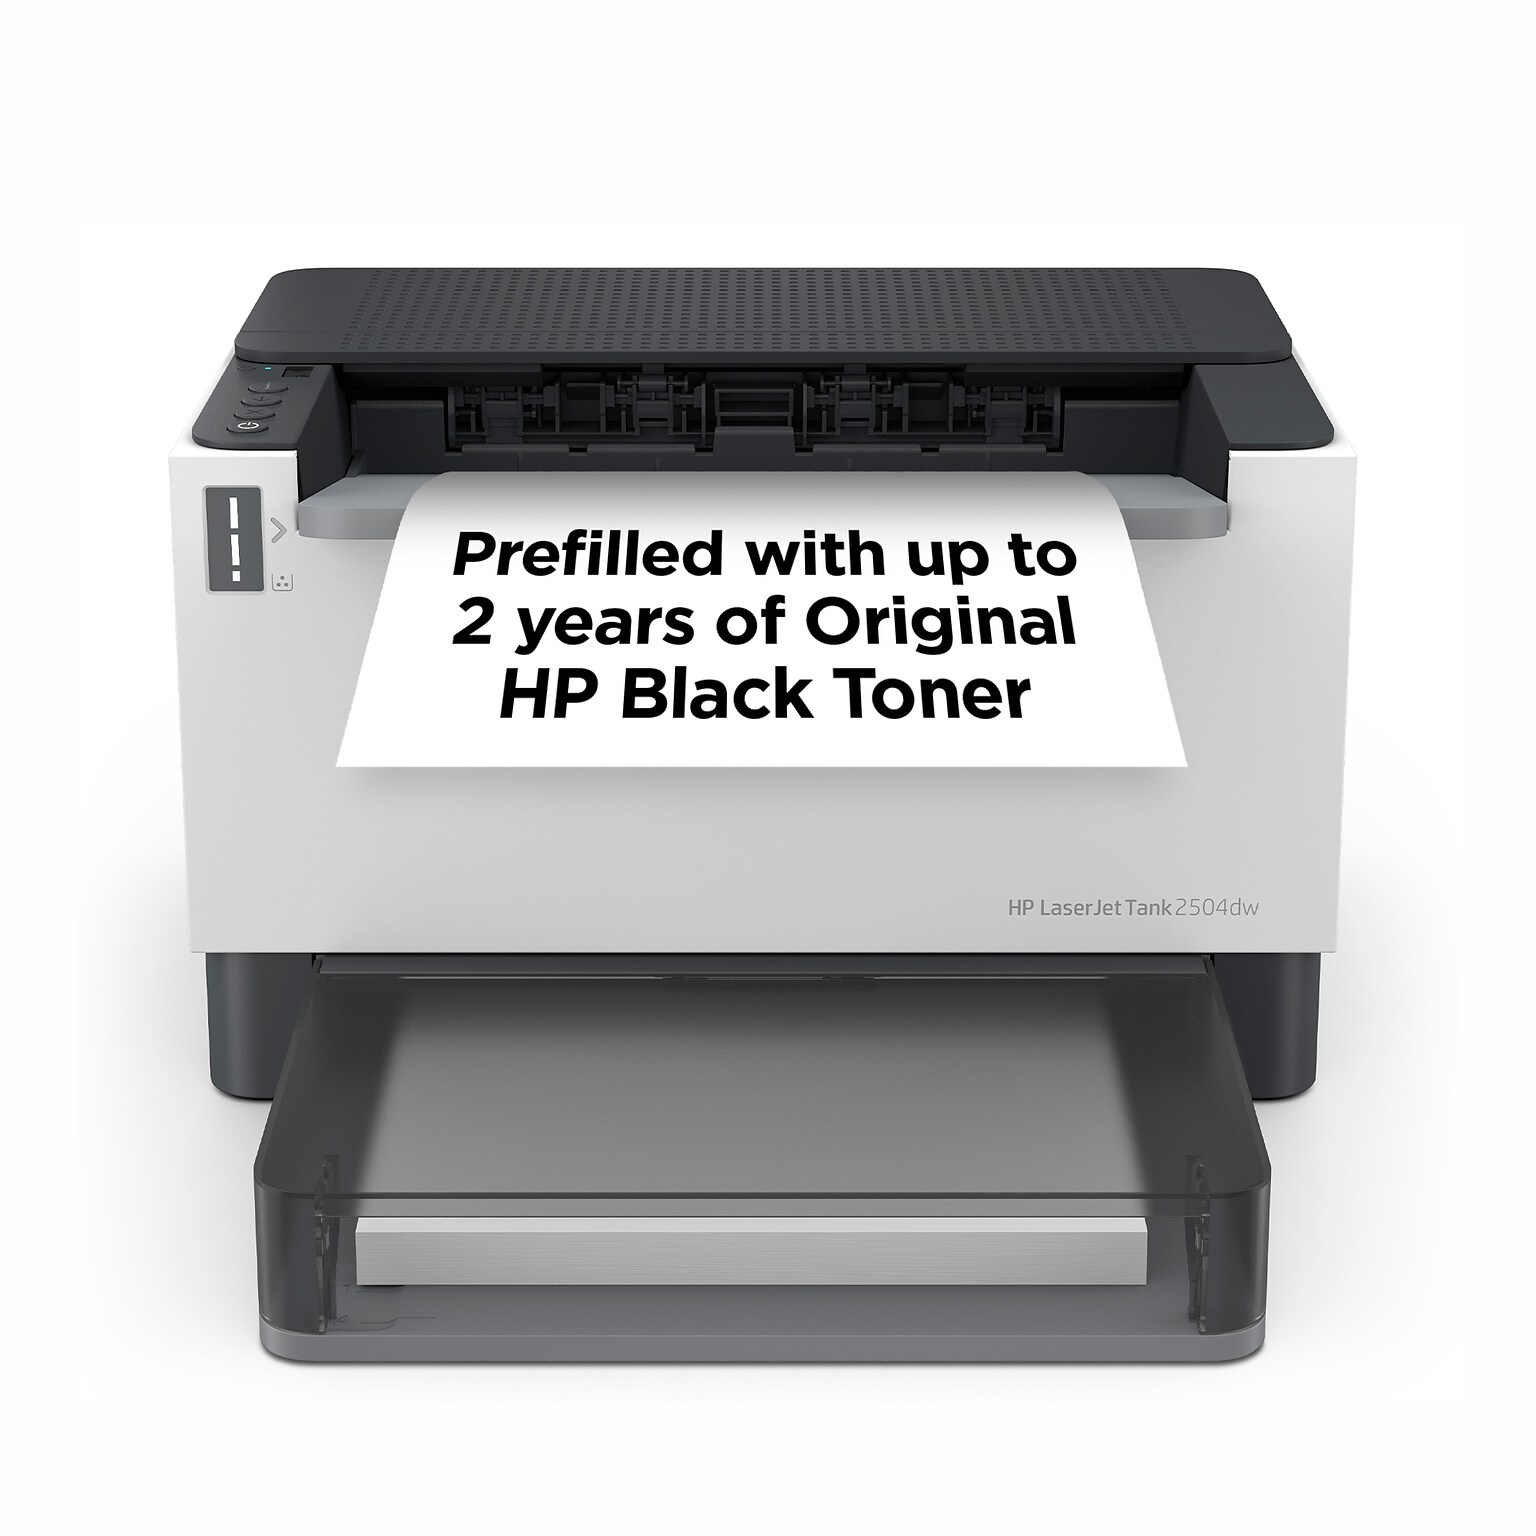 Ongelofelijk Koloniaal verkoopplan HP LaserJet Tank 2504dw Wireless Black & White Refillable Laser Printer  Prefilled with Up to 2 Years | Quill.com